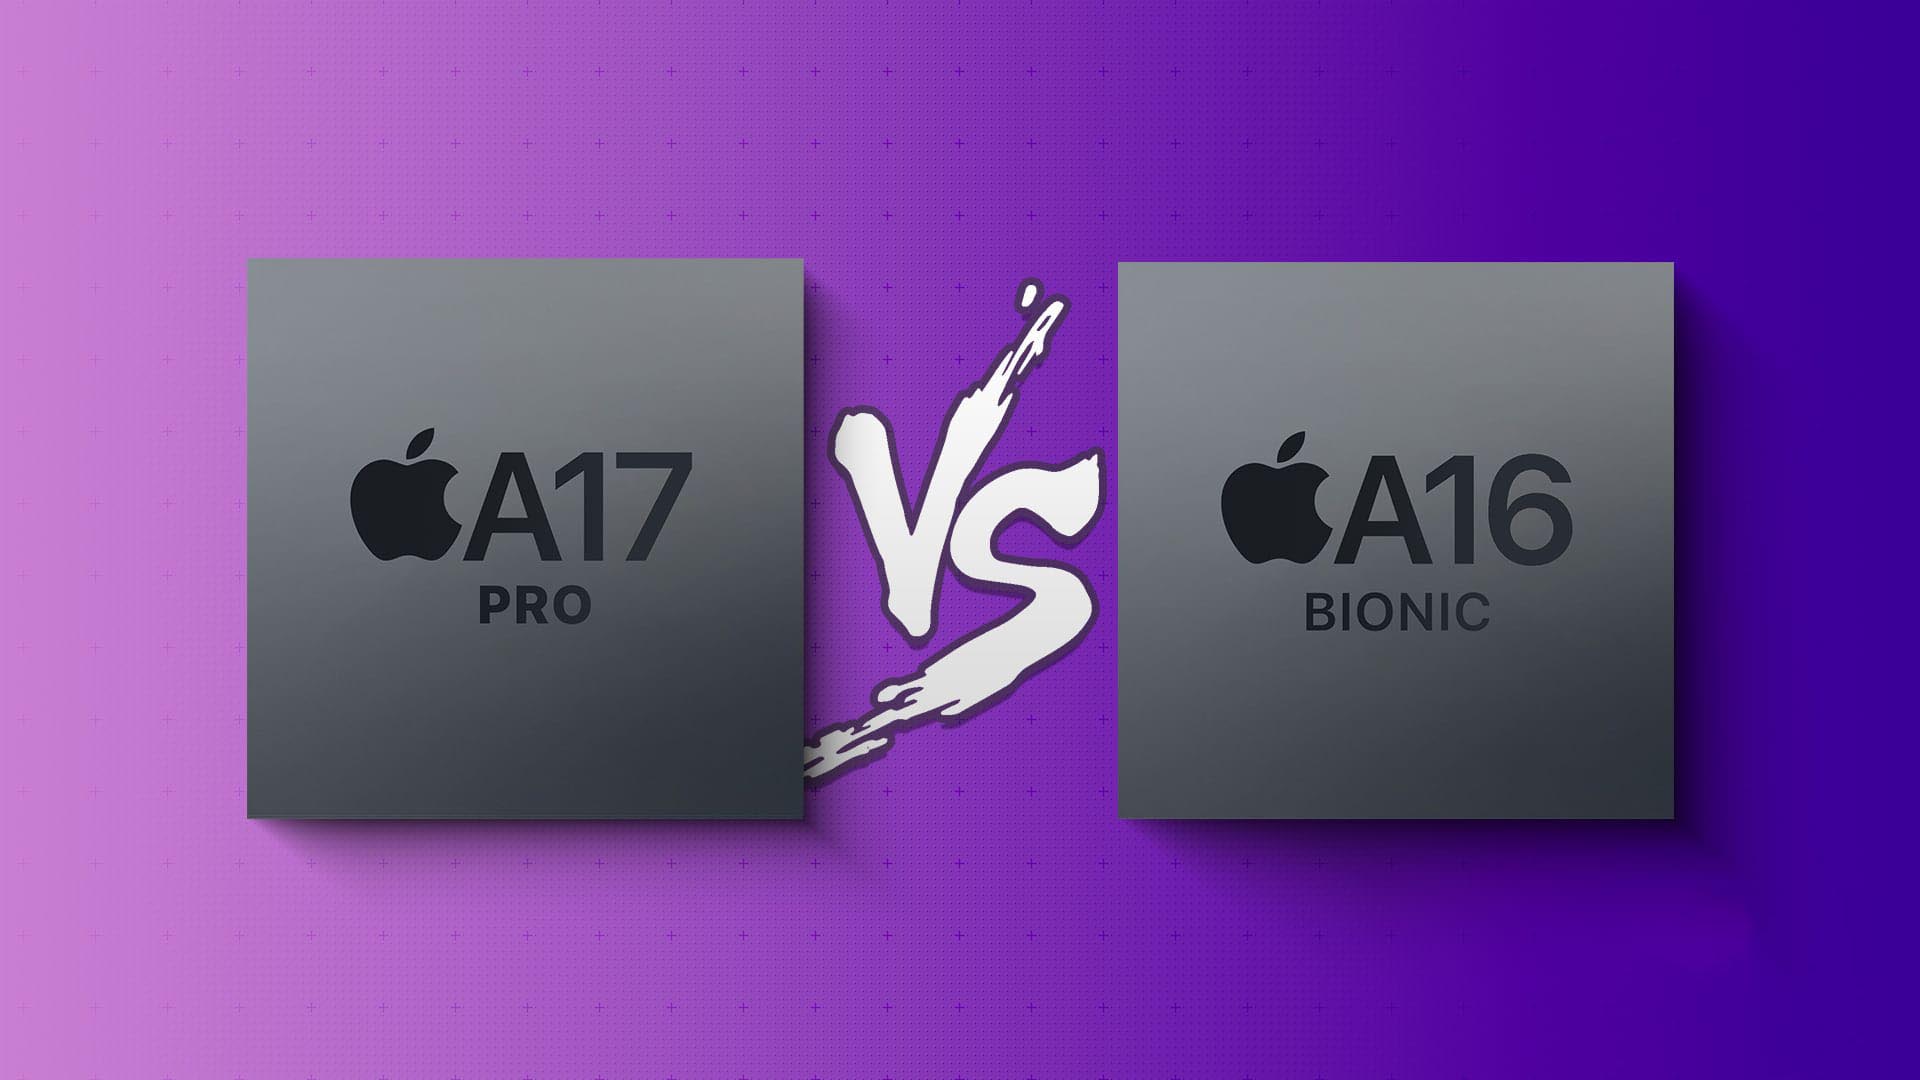 A17 pro vs A16 bionic